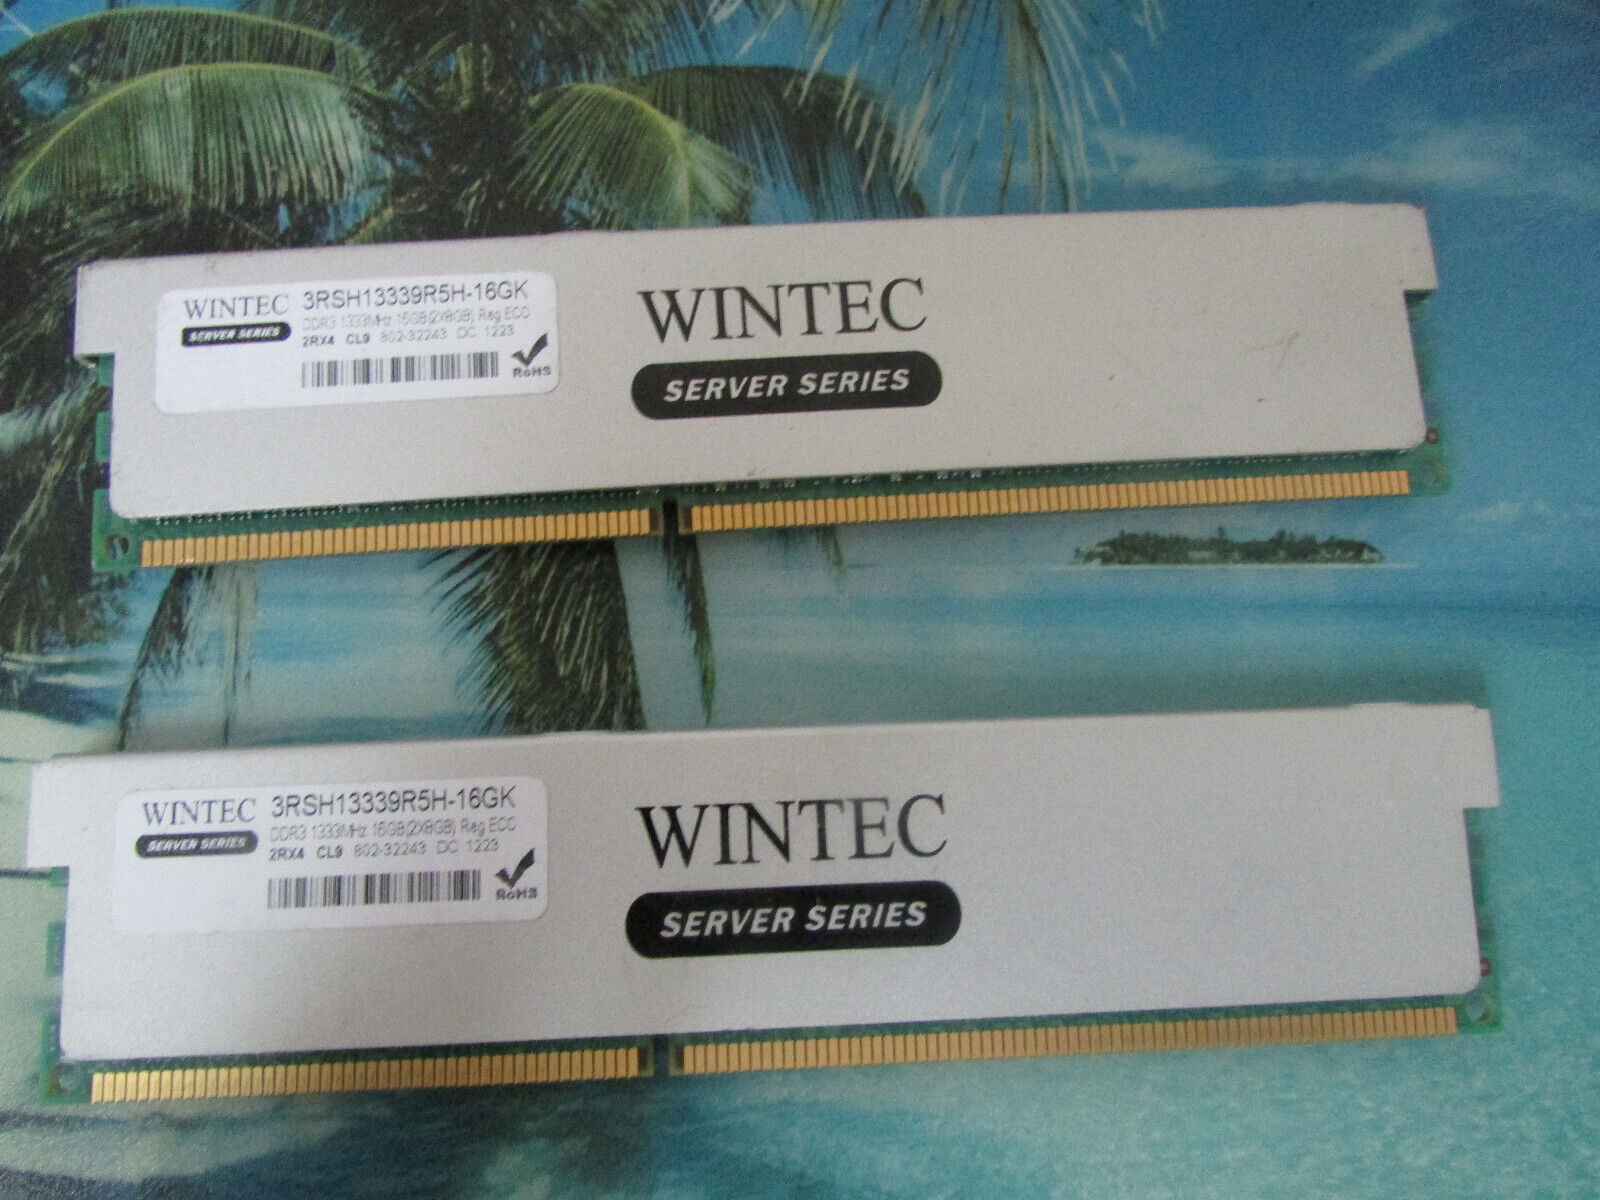 Wintec Server Series 16GB (2X 8GB) DDR3 1333 PC3 RDIMM ECC RAM 3RSH13339R5H-16gk